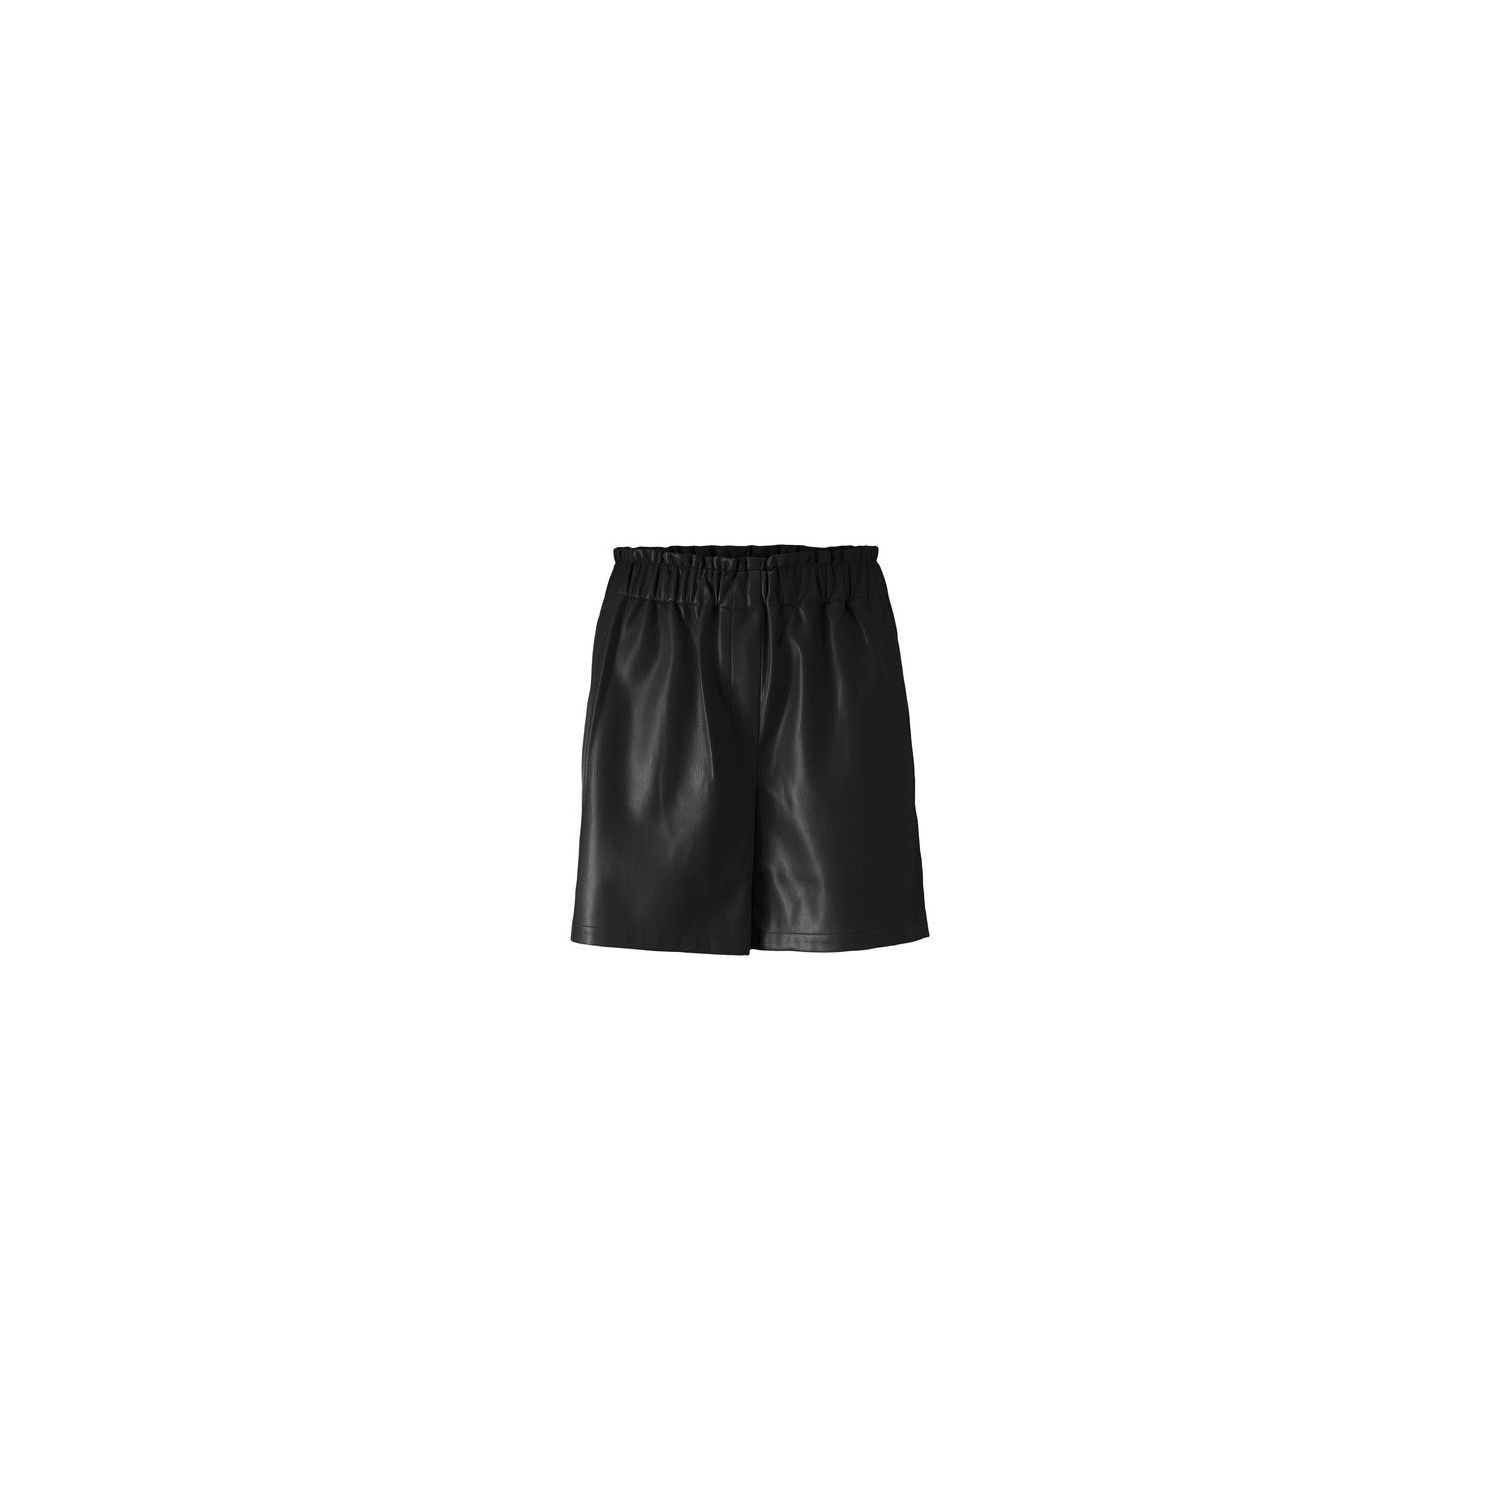 Modstrom jackson shorts, fashion shorts black